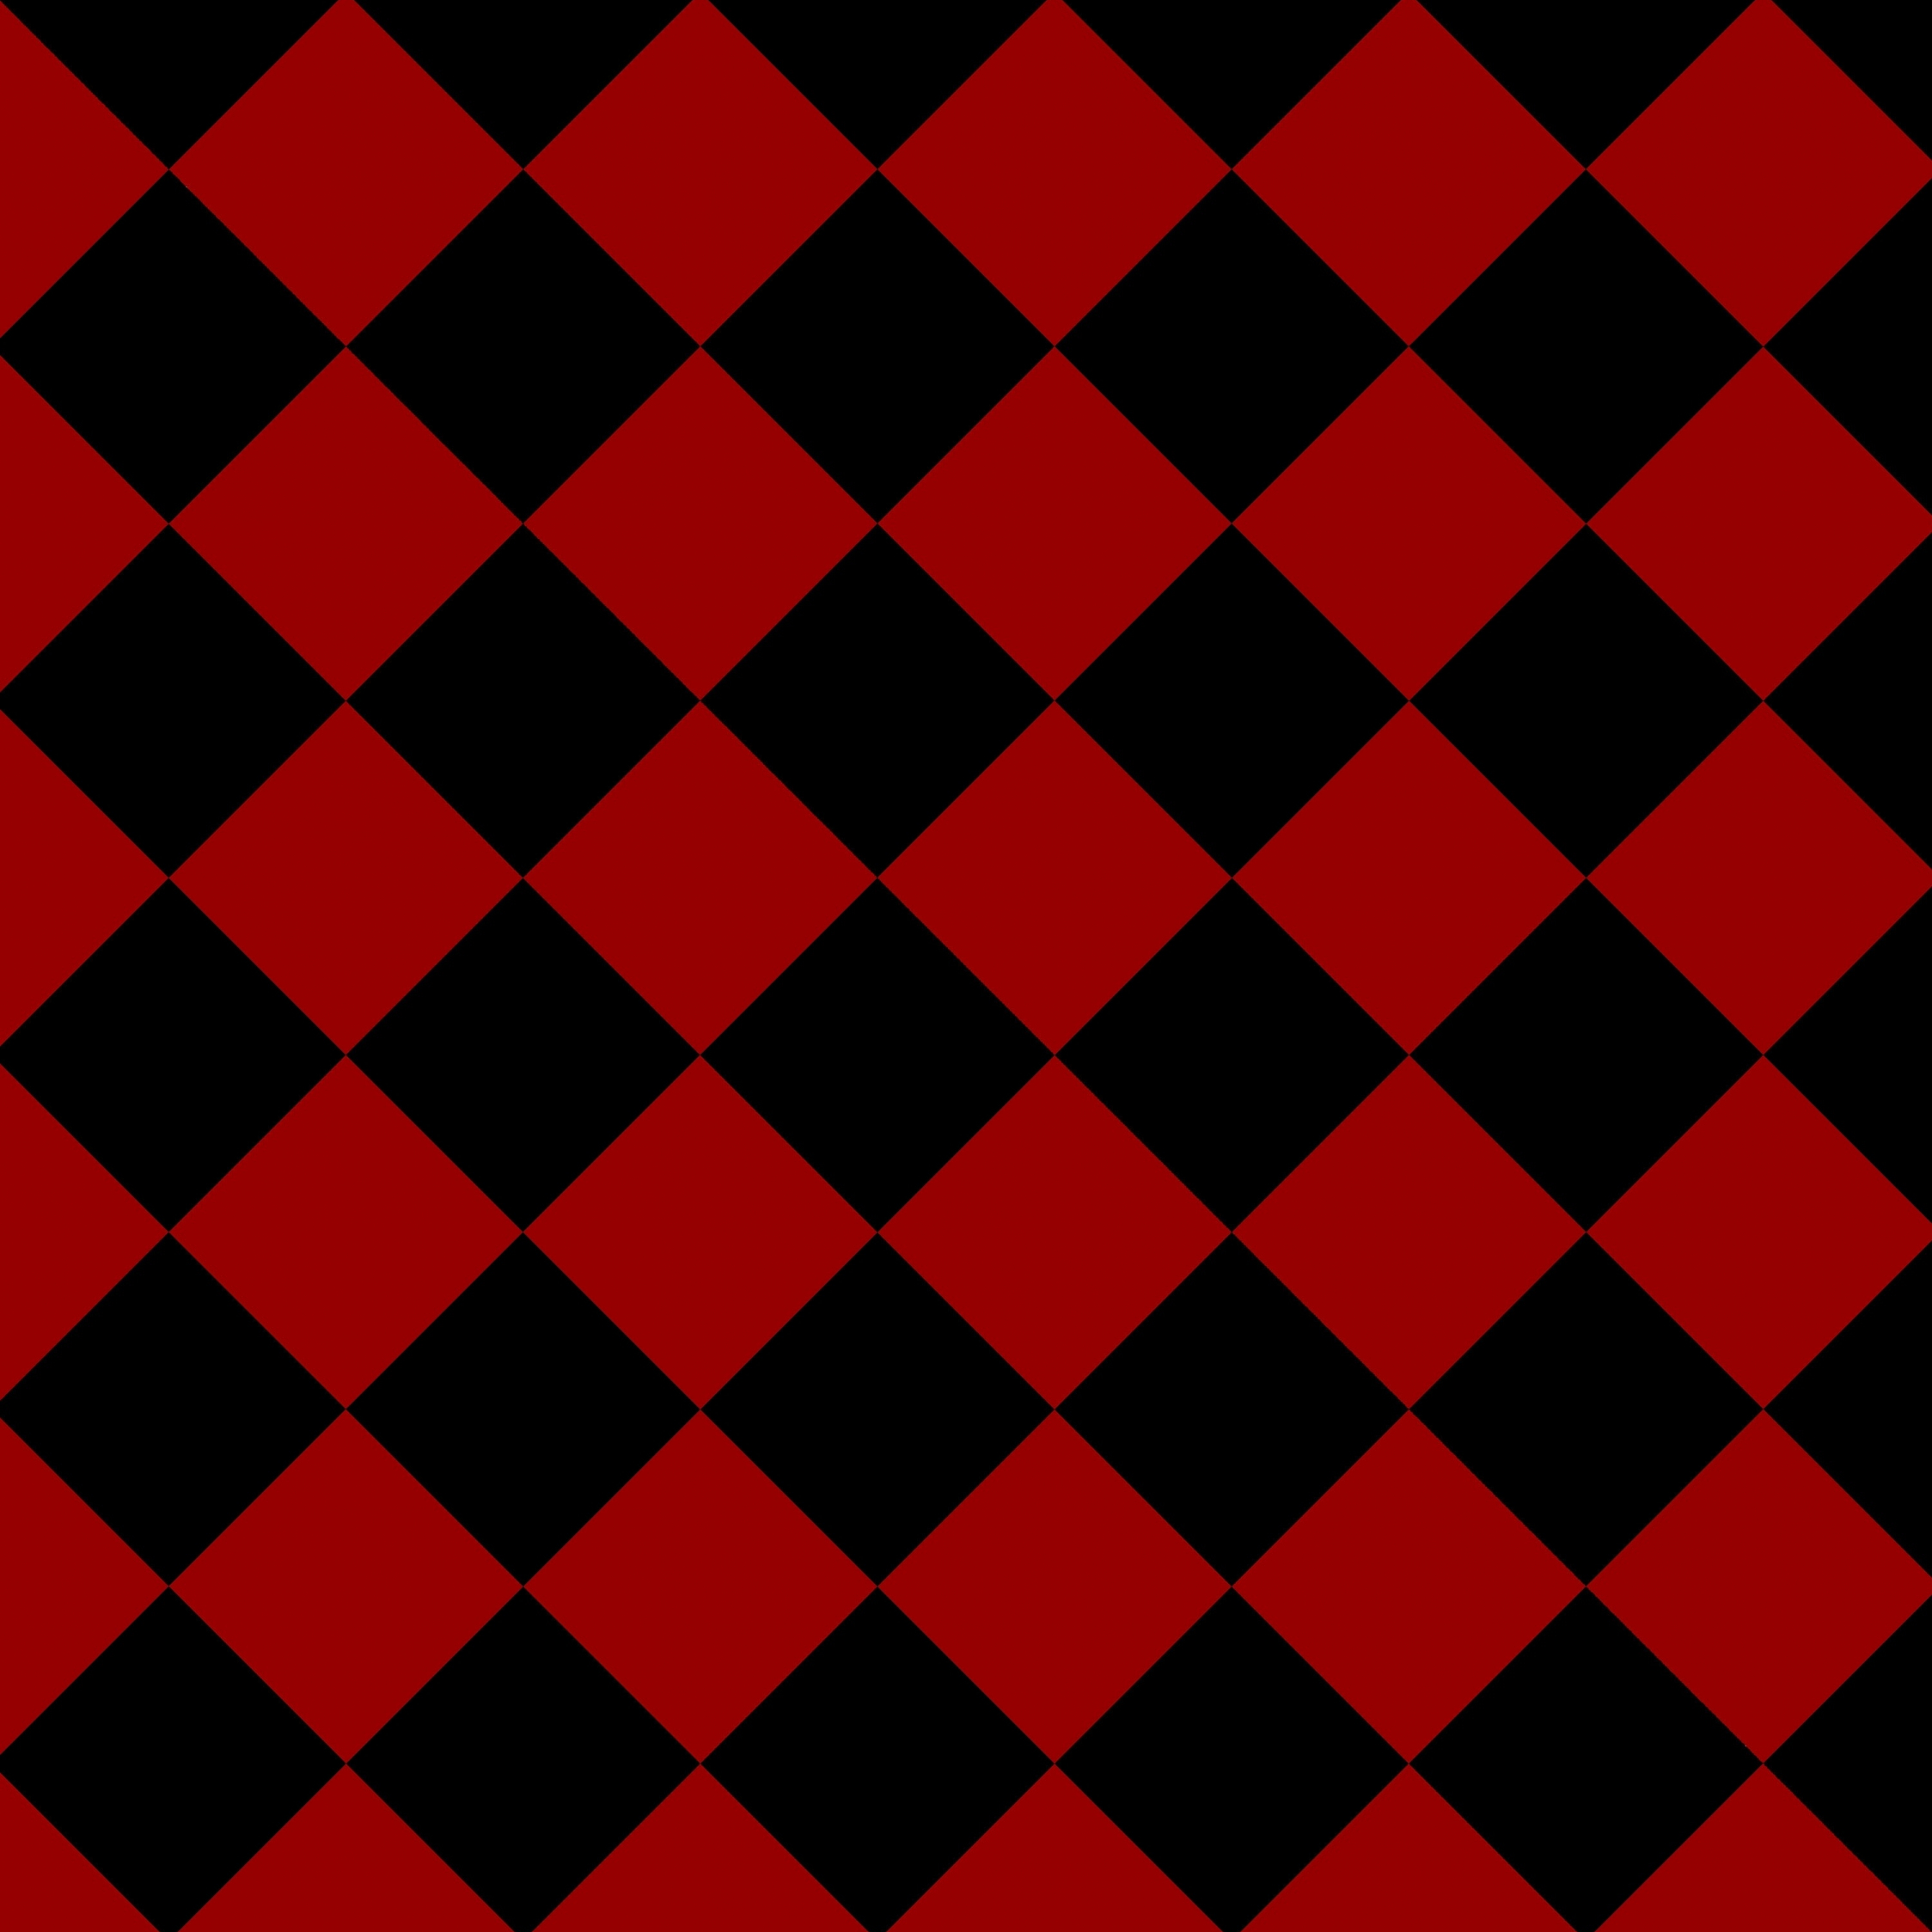 Dark Red Ipad Wallpapers